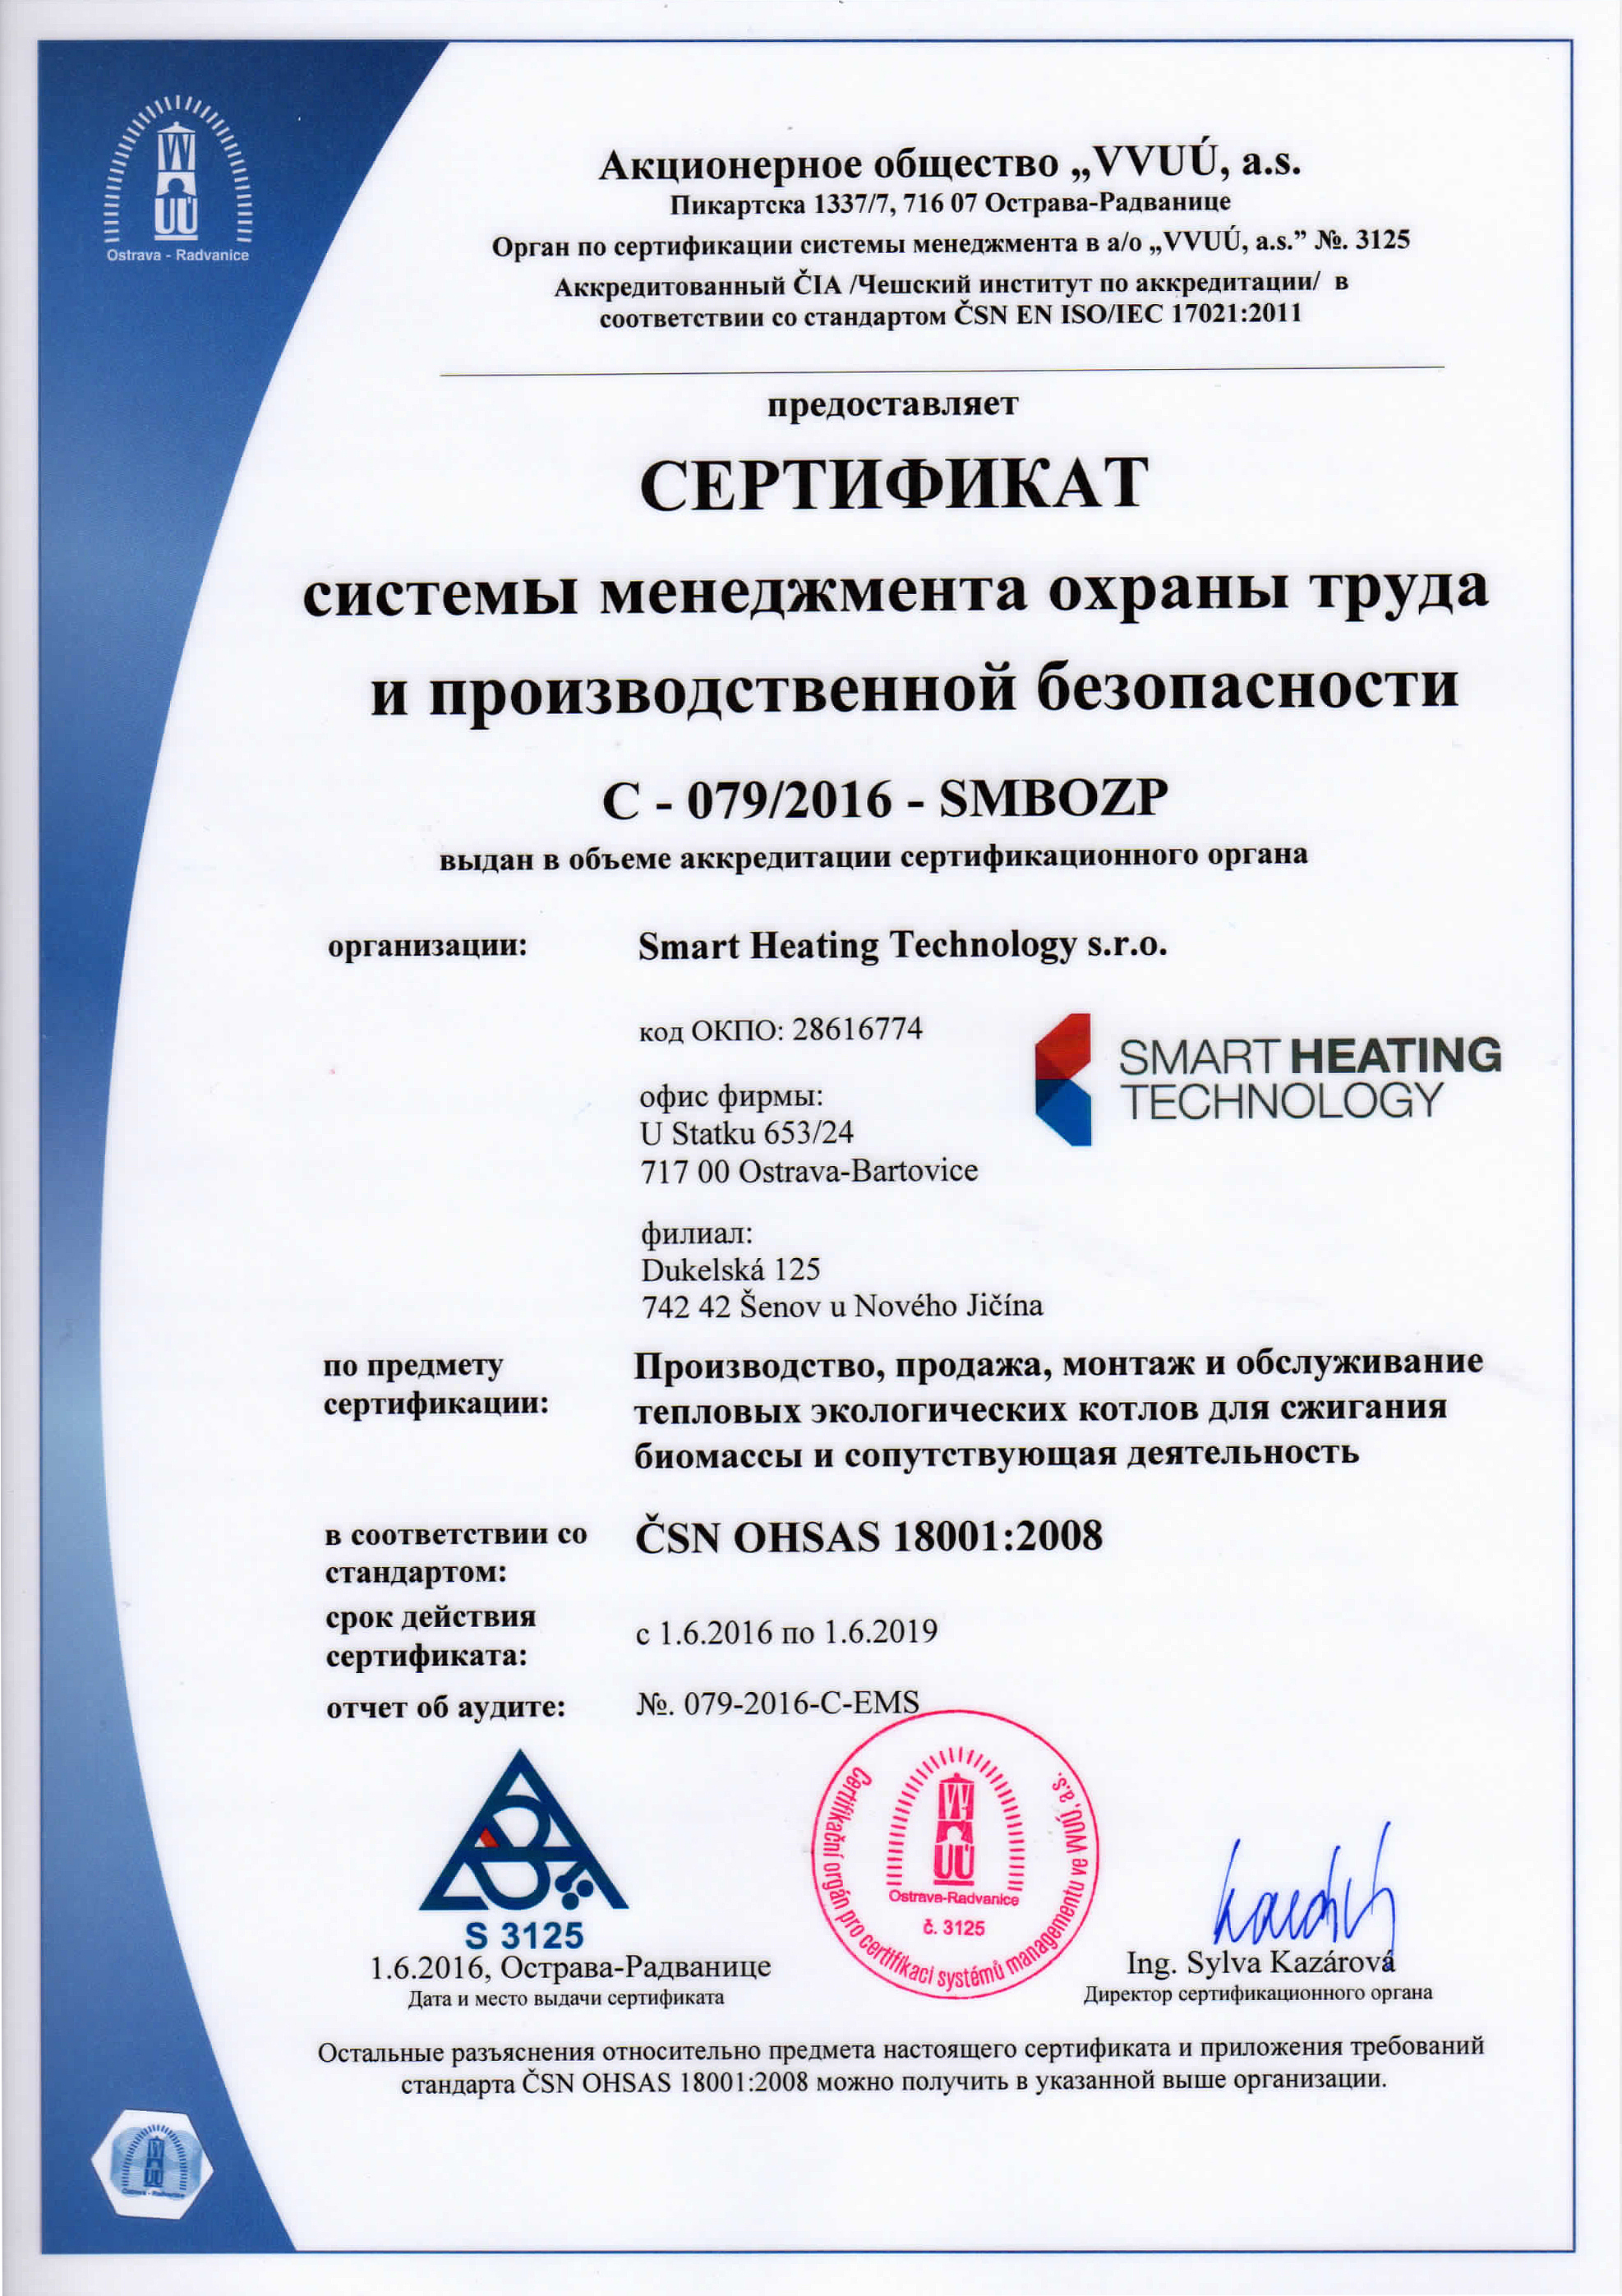 certifikat-c-079_2016-smbozp-ru